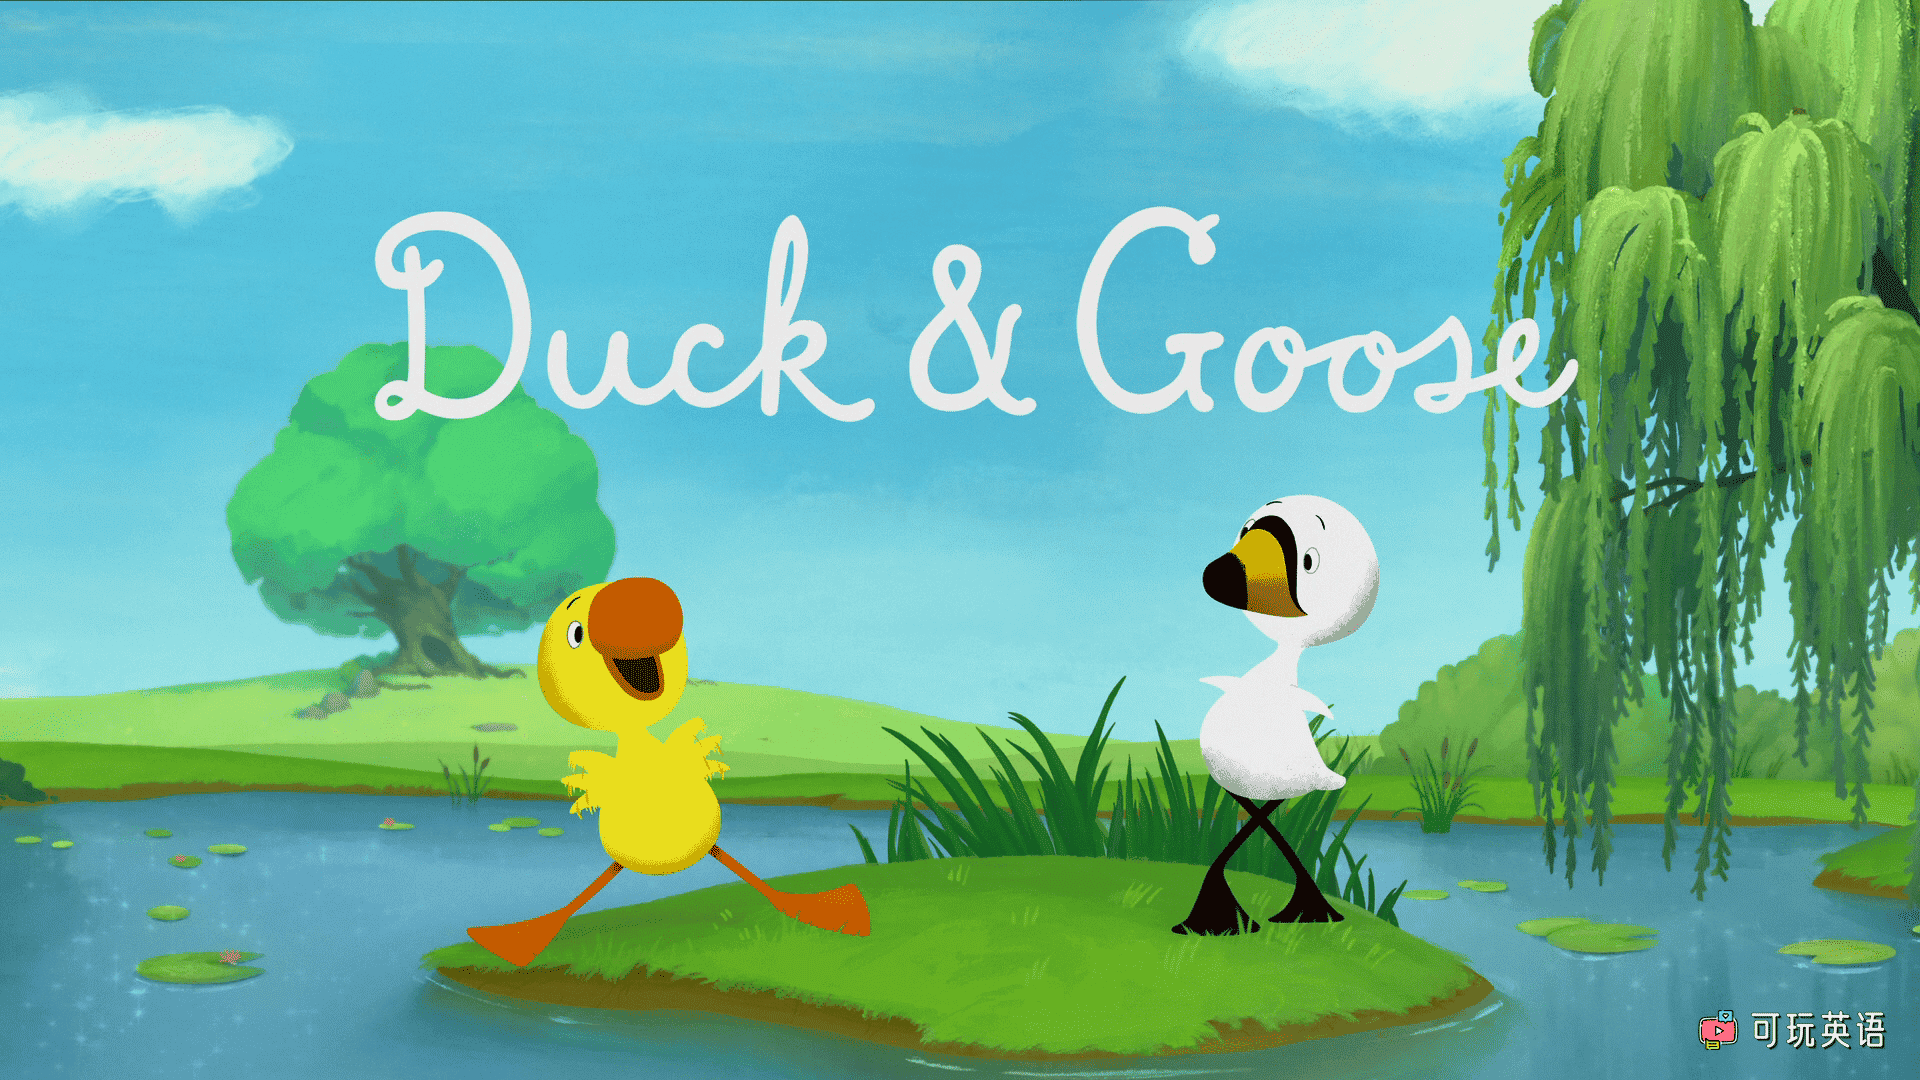 《Duck & Goose (2022)》 小鸭和小鹅英文版，第1季，全8集，1080P高清视频带英文字幕，百度网盘下载！ - 可玩星球-可玩星球